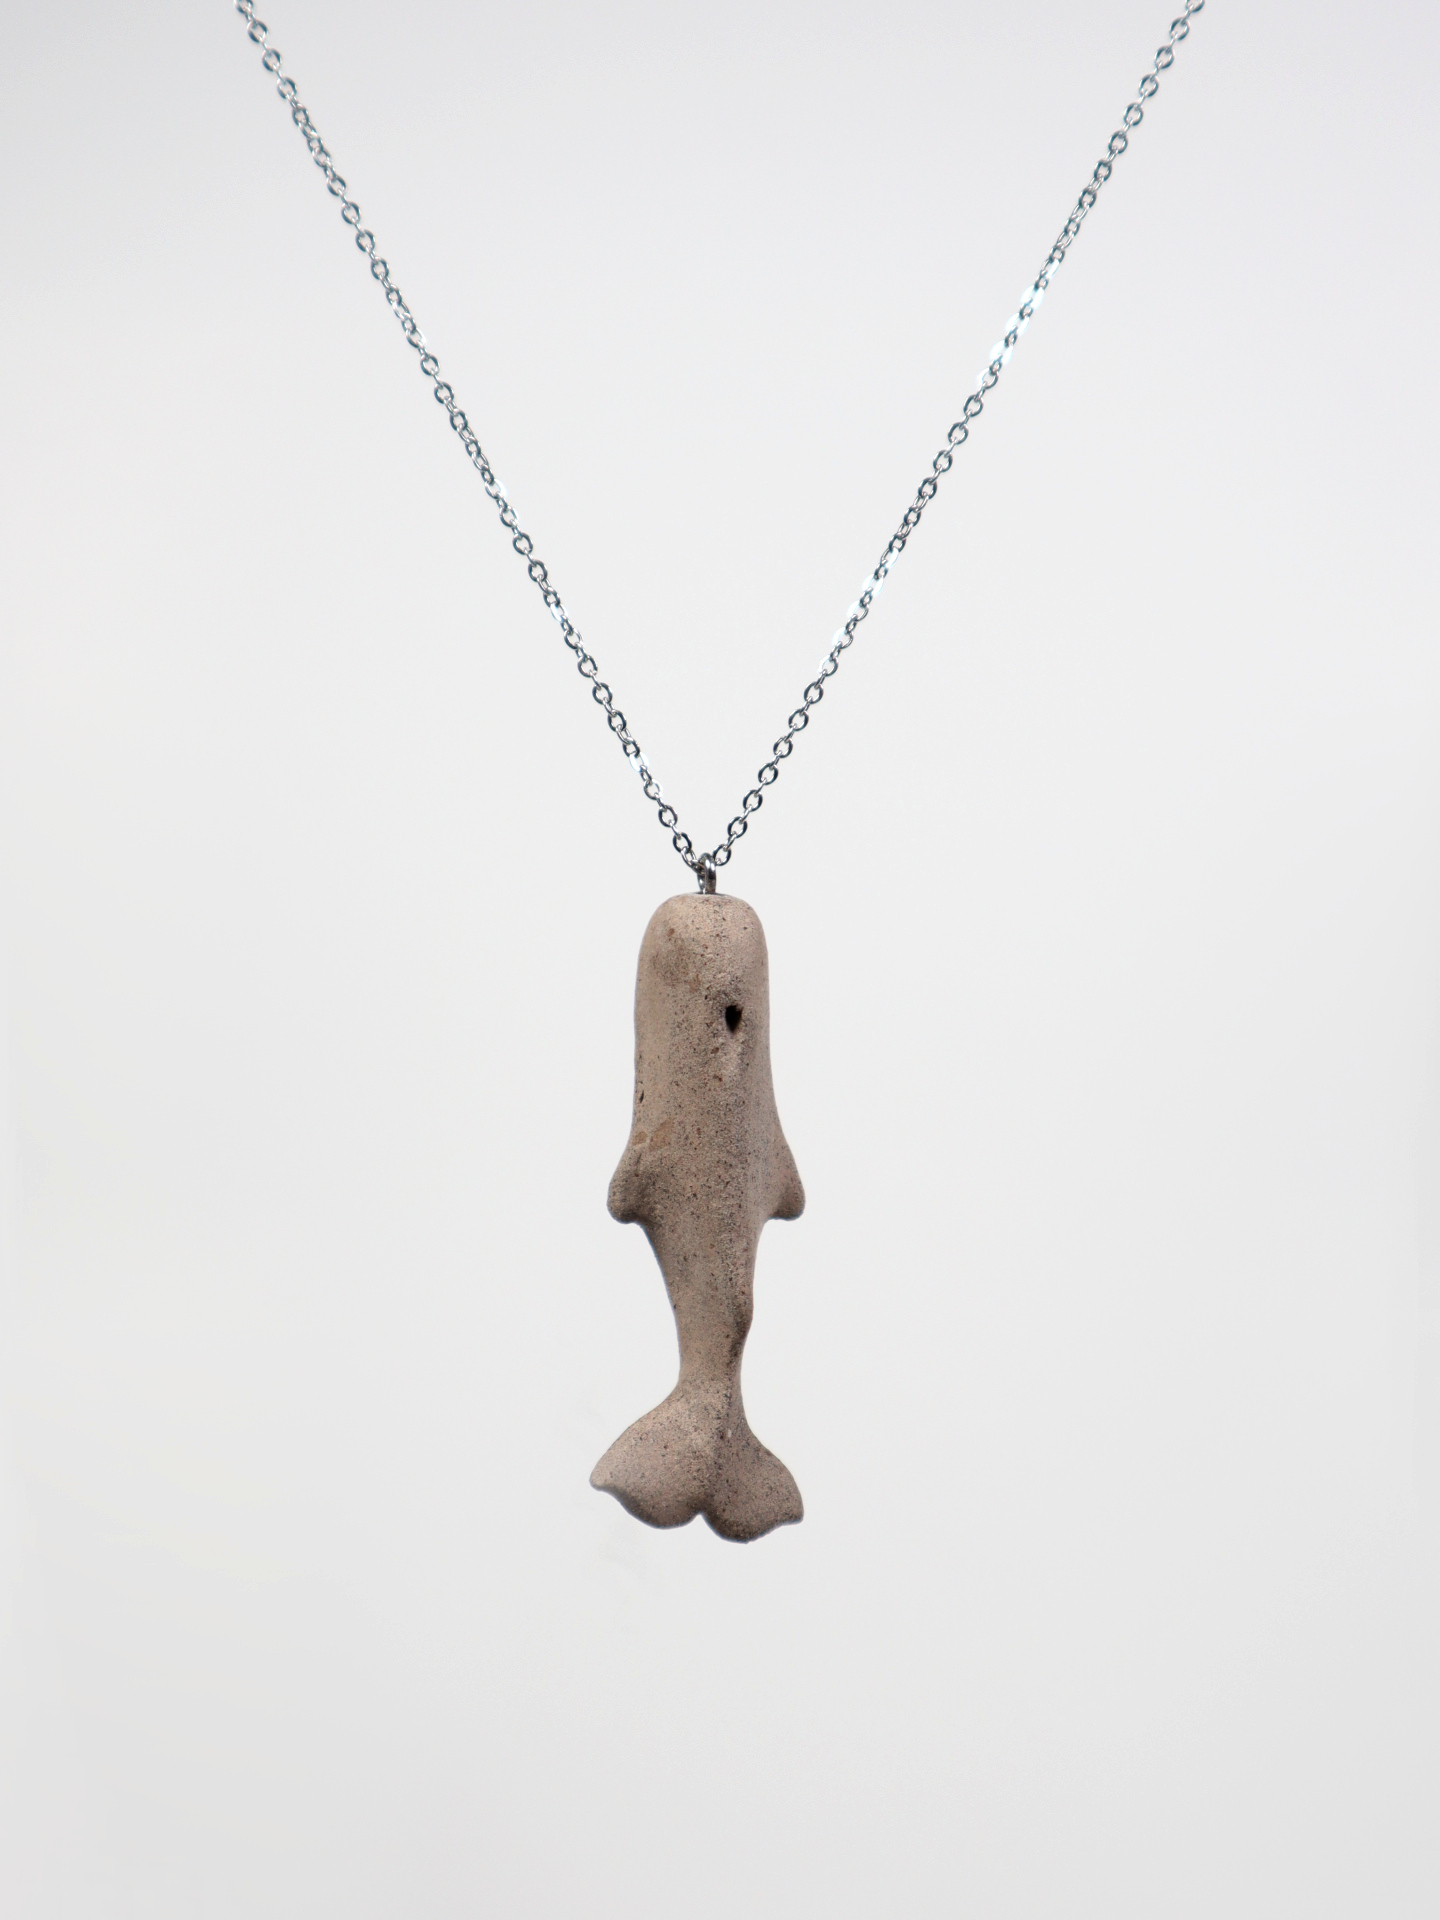 Ceramic whale necklace - light gray